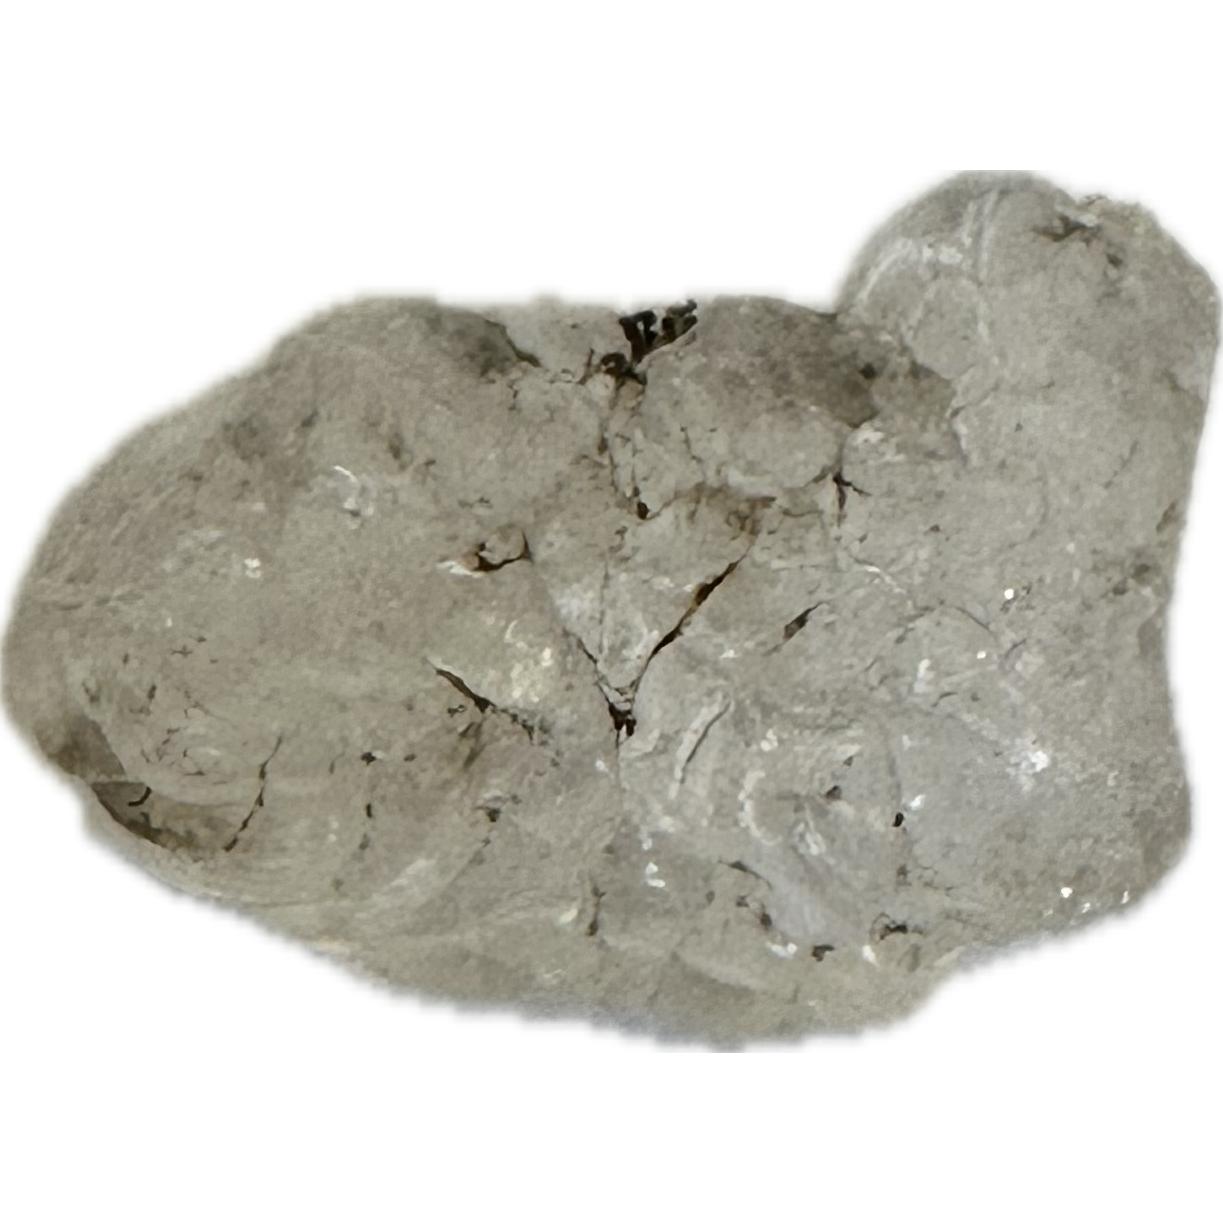 Opal, Hyalite, uv reactive, 2.46 grams, Mexico Prehistoric Online